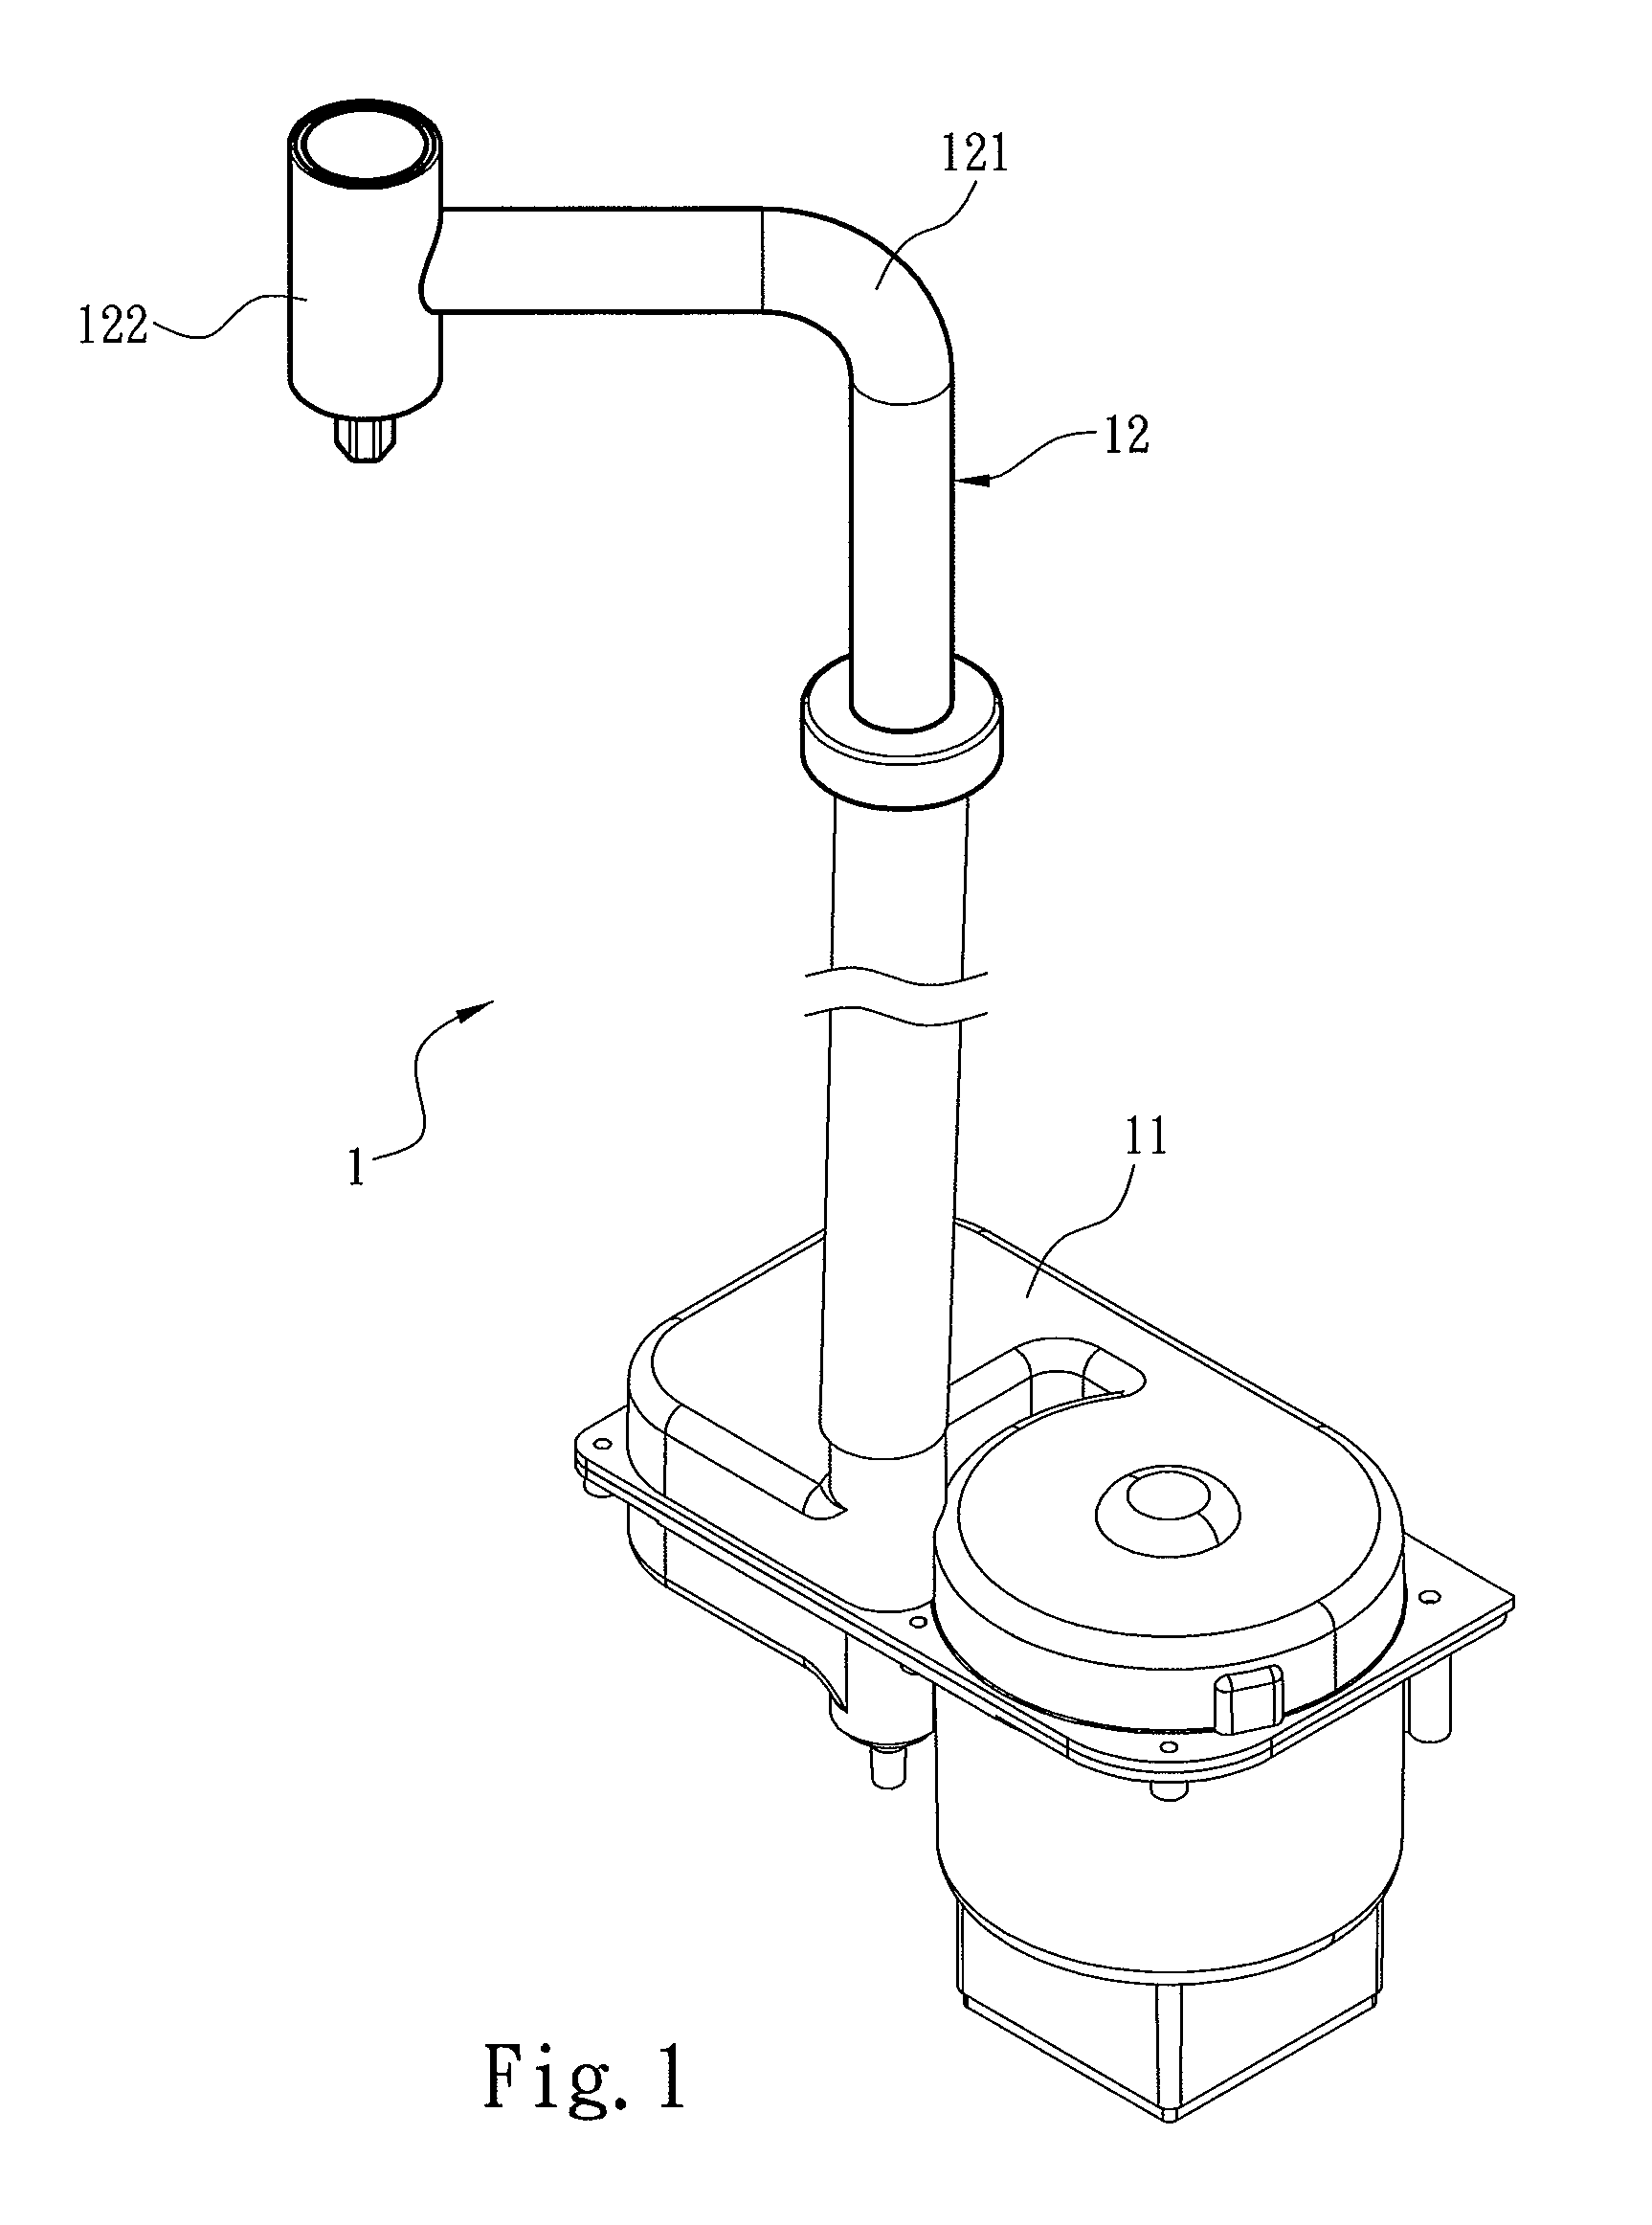 Auto-sensing hand dryer